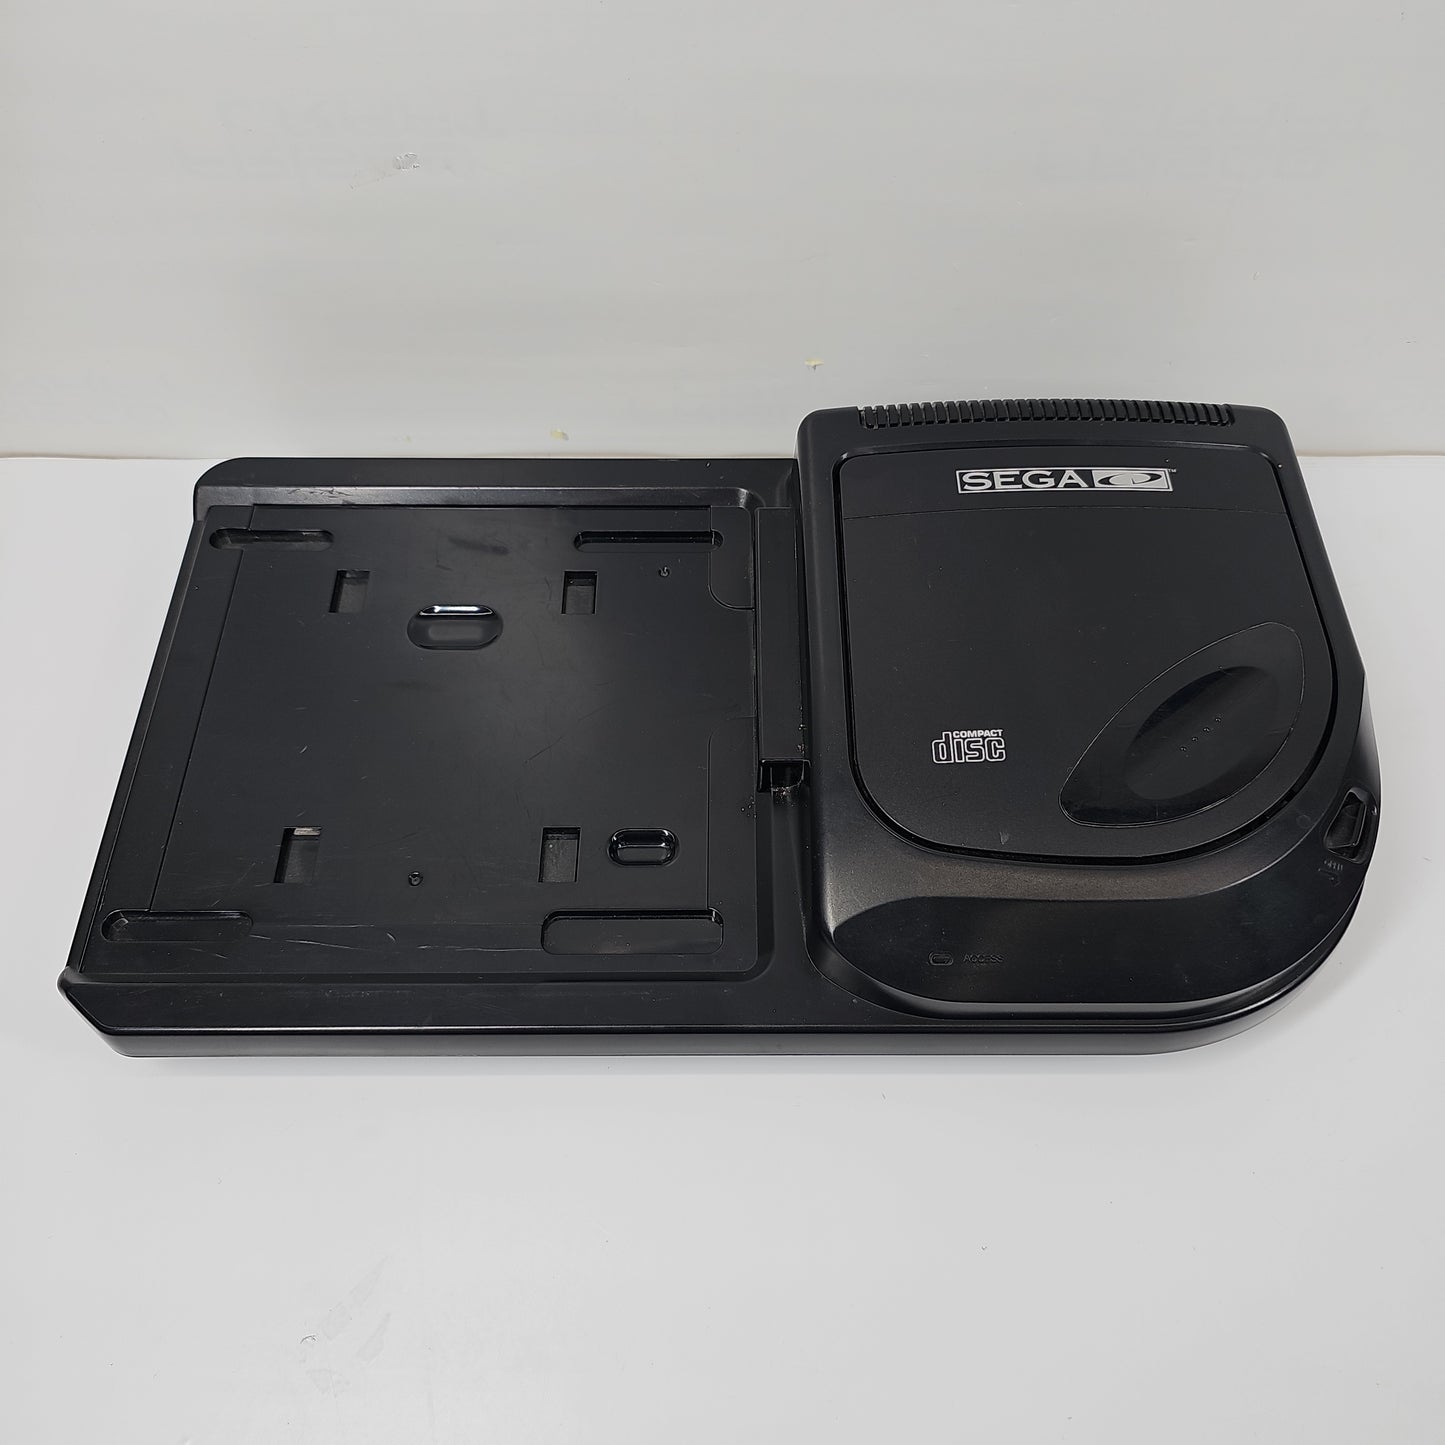 Sega Genesis 2 "Tower of Power" CD 32X Video Game Console Black MK-1361